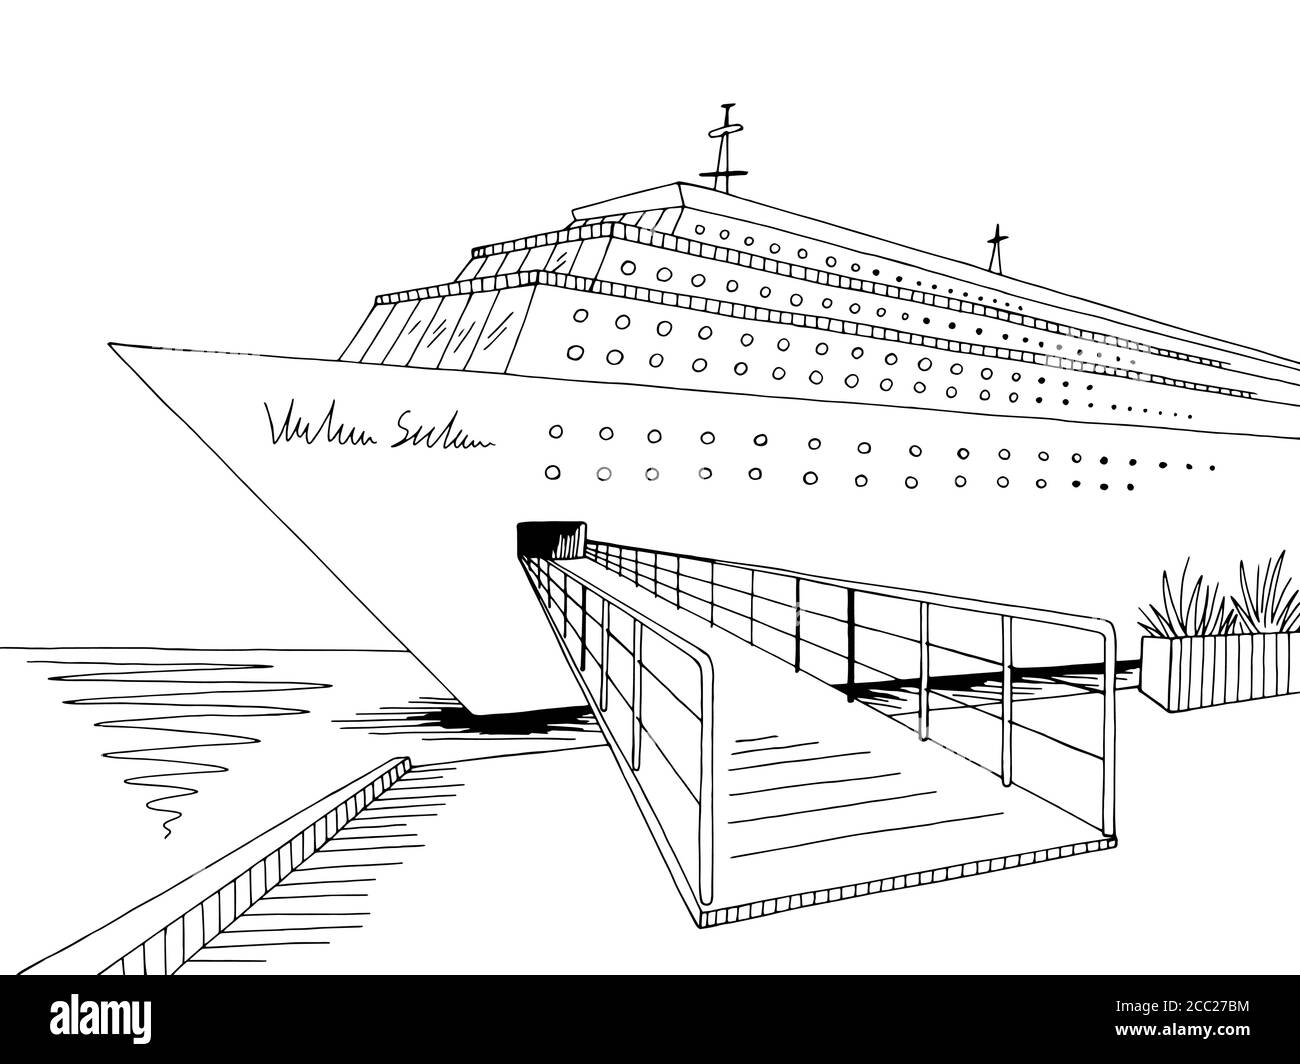 Kreuzfahrtschiff Grafik schwarz weiß Landschaft Skizze Illustration Vektor Stock Vektor